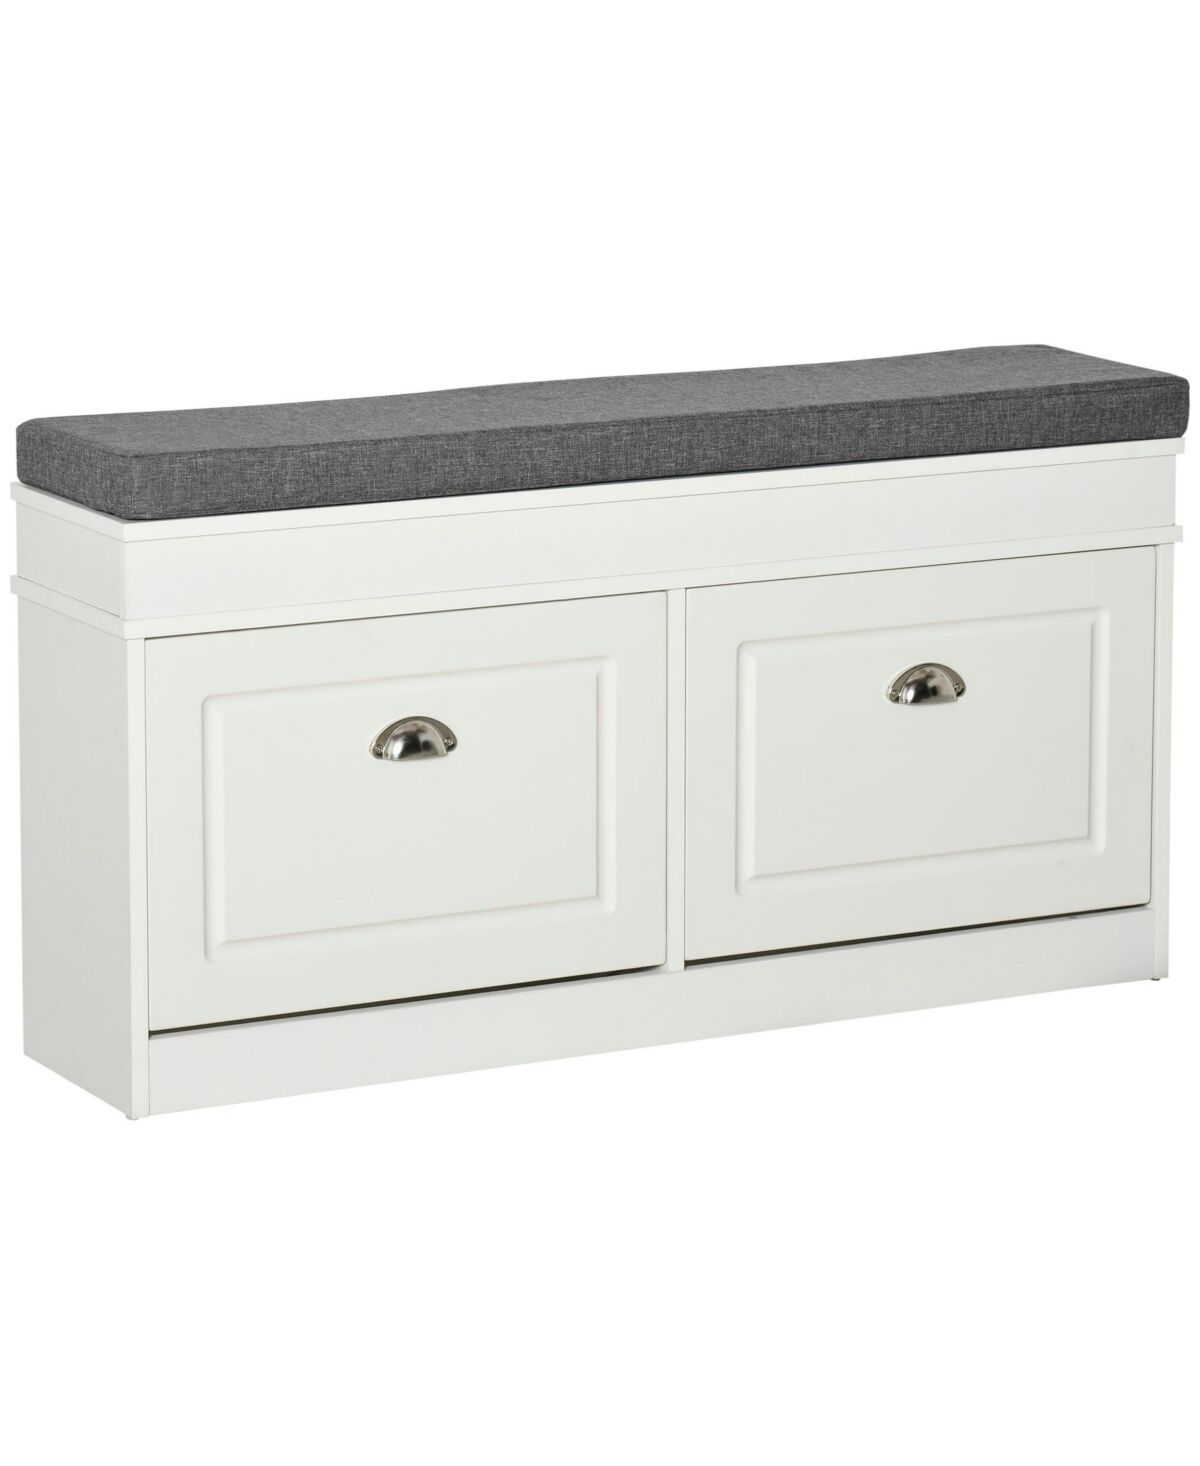 Homcom Wood Shoe Rack Storage Bedroom Bench Cabinet Stool w/ Drawers & Cushion - White